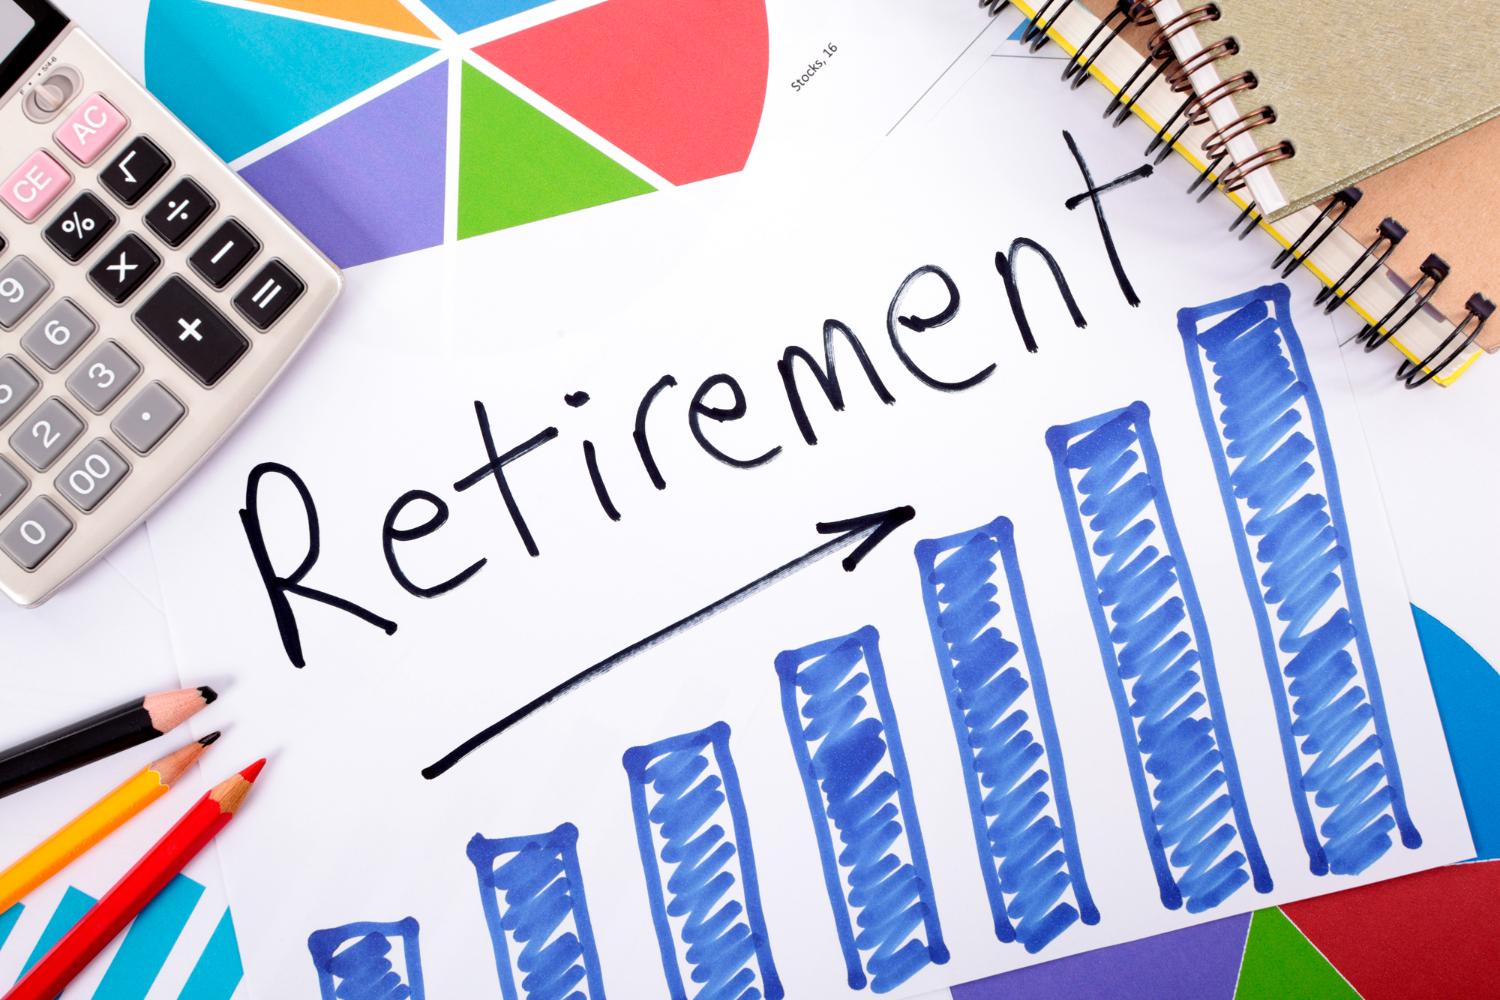 Retirement Savings Accounts